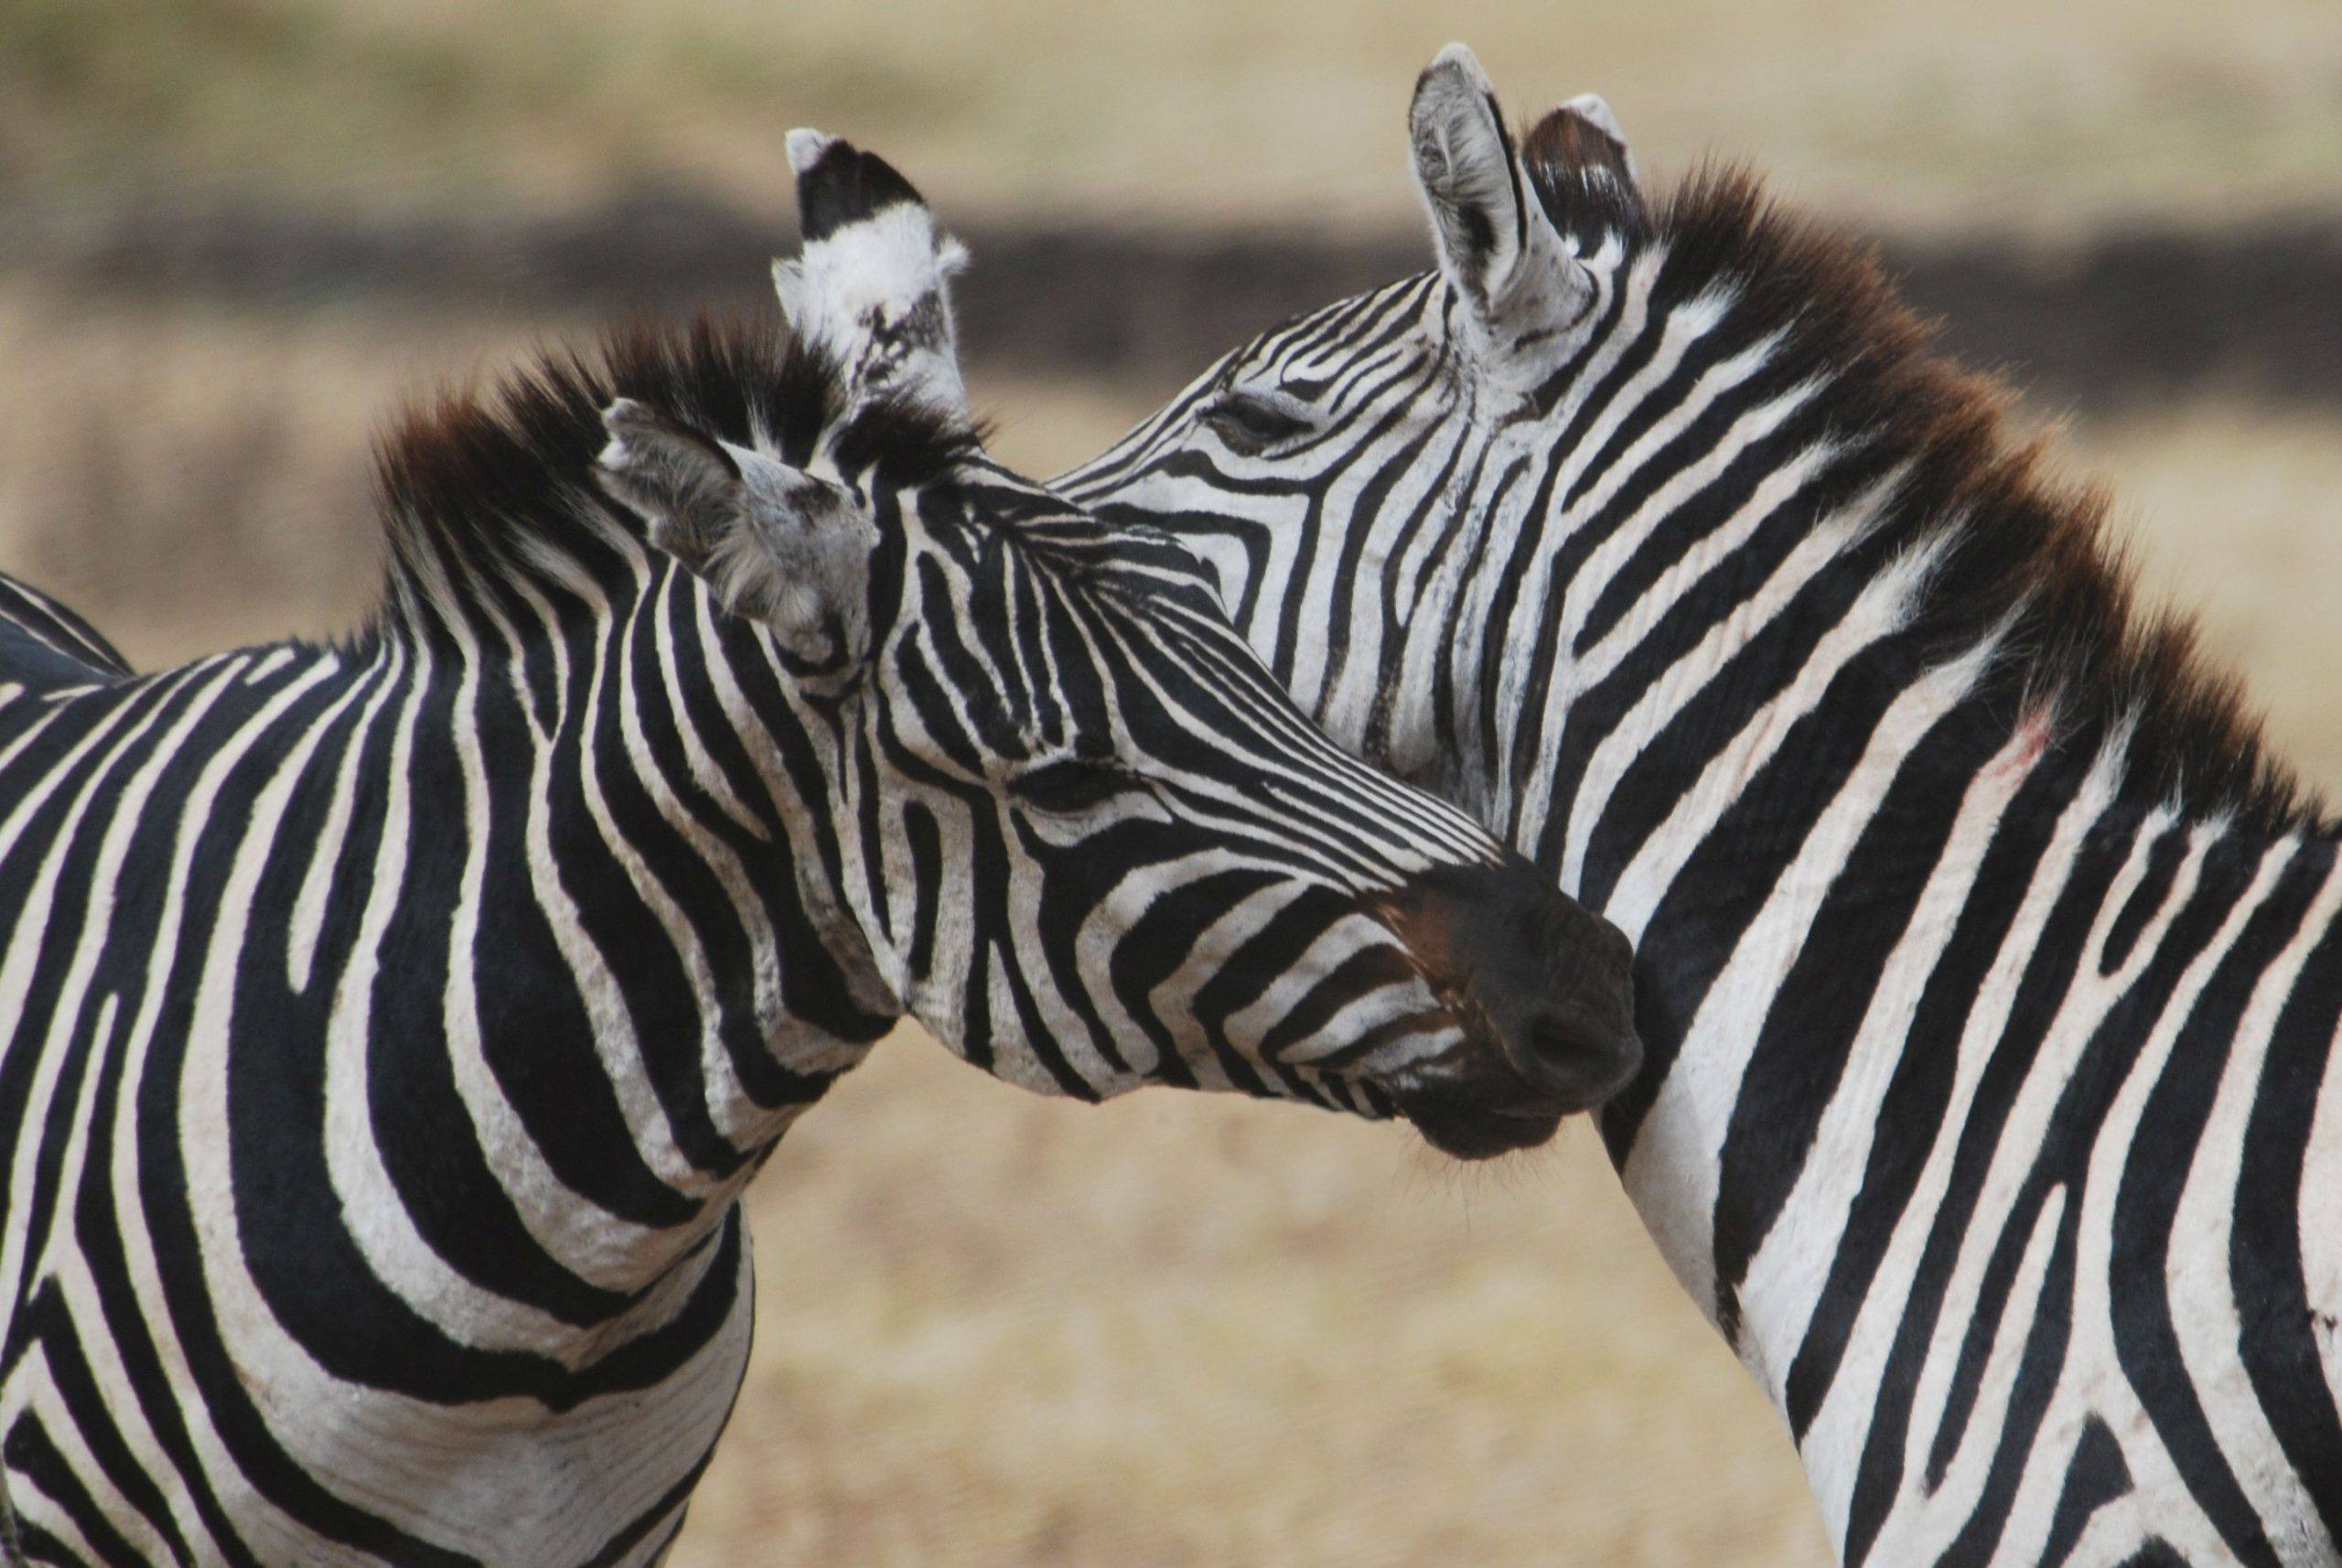 Two zebra grooming